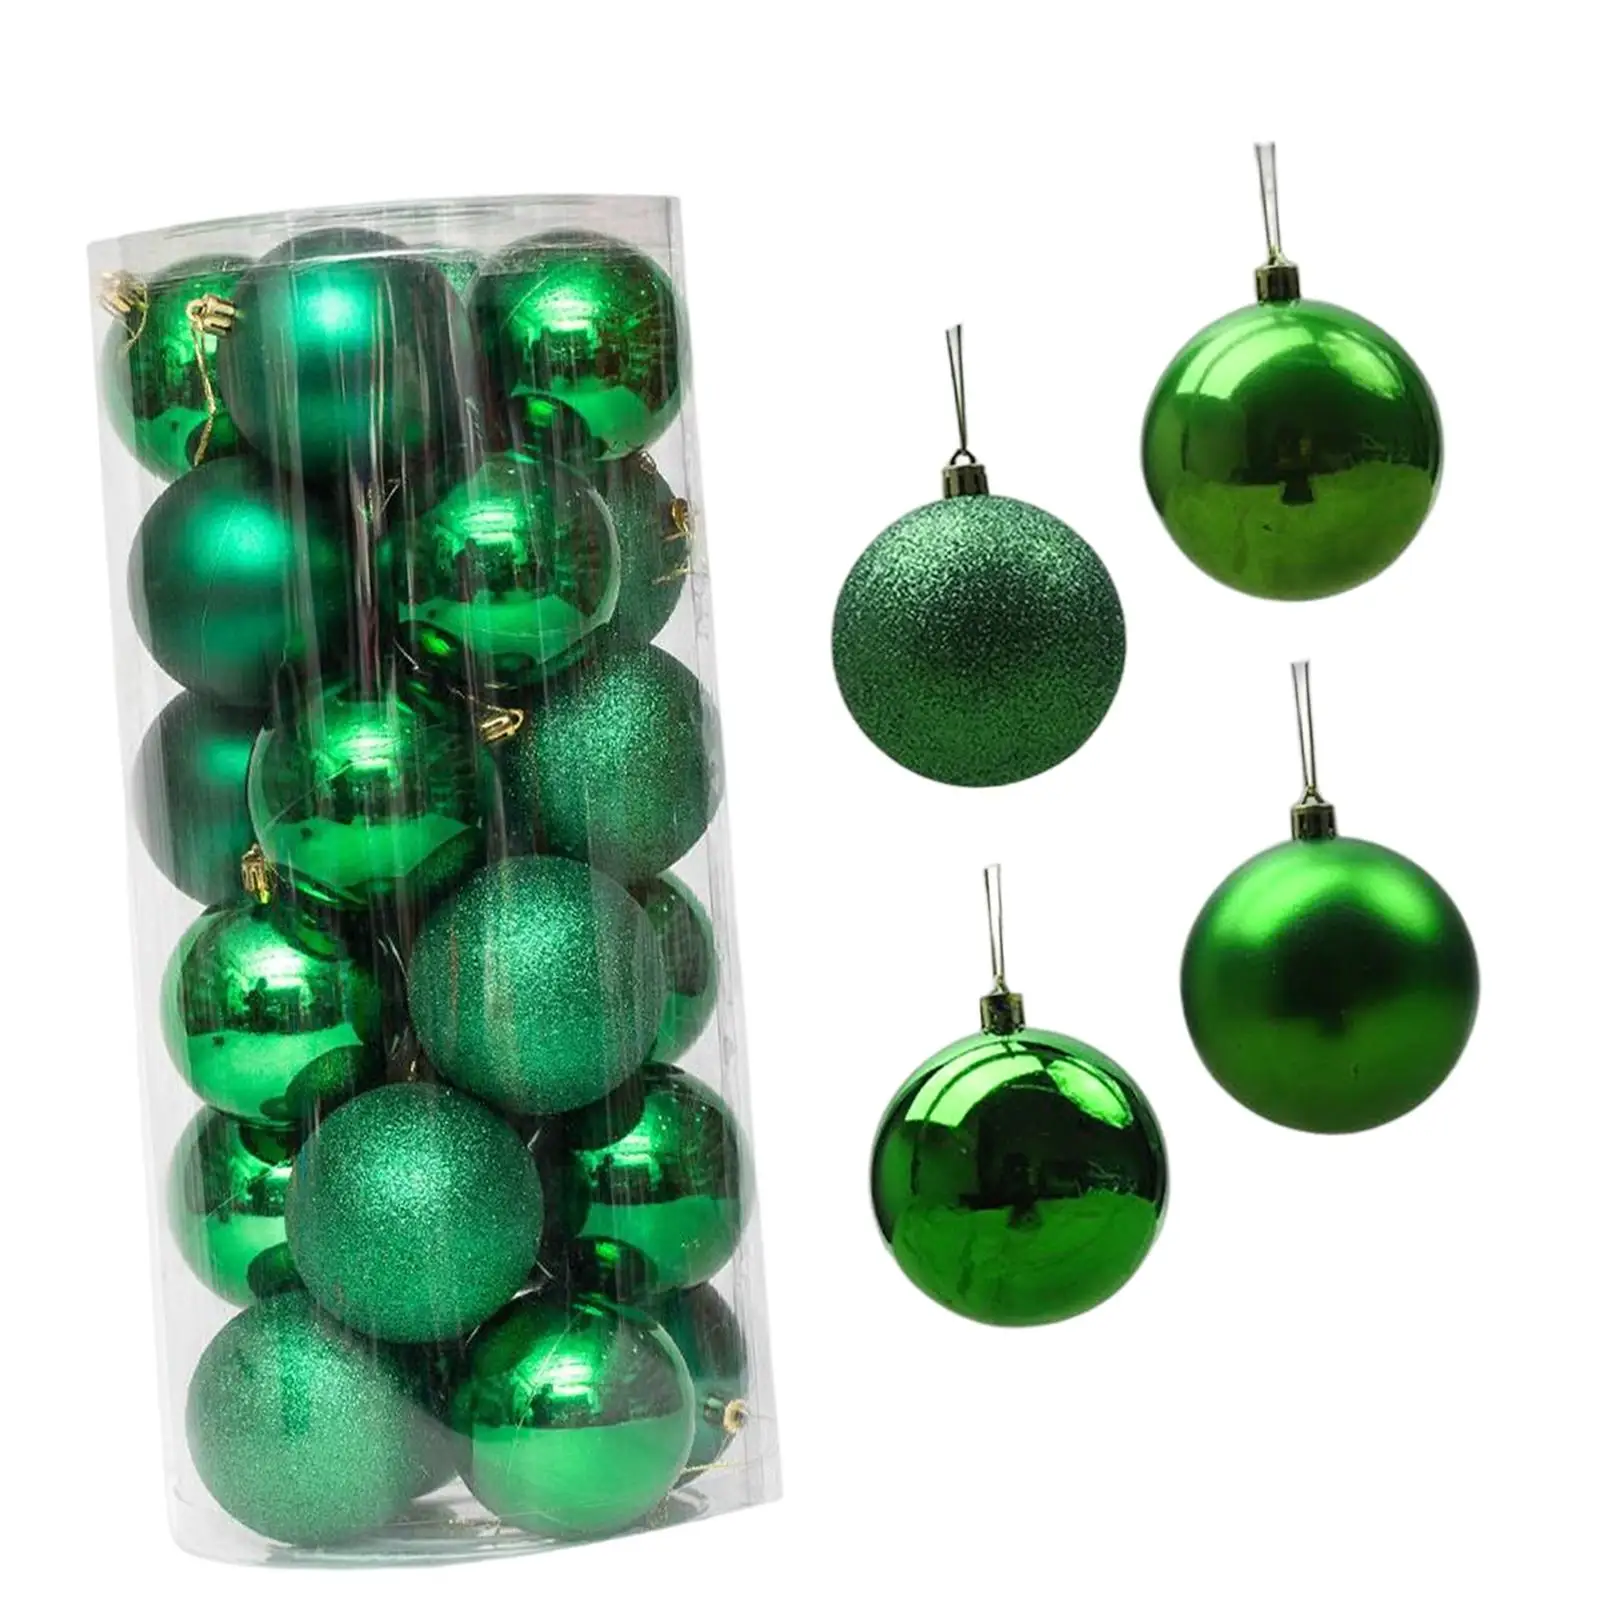 24x Christmas Balls Ornament Hanging Xmas Balls Baubles Xmas Tree Decorations 6cm Balls for Party Festival Holiday Outdoor Decor